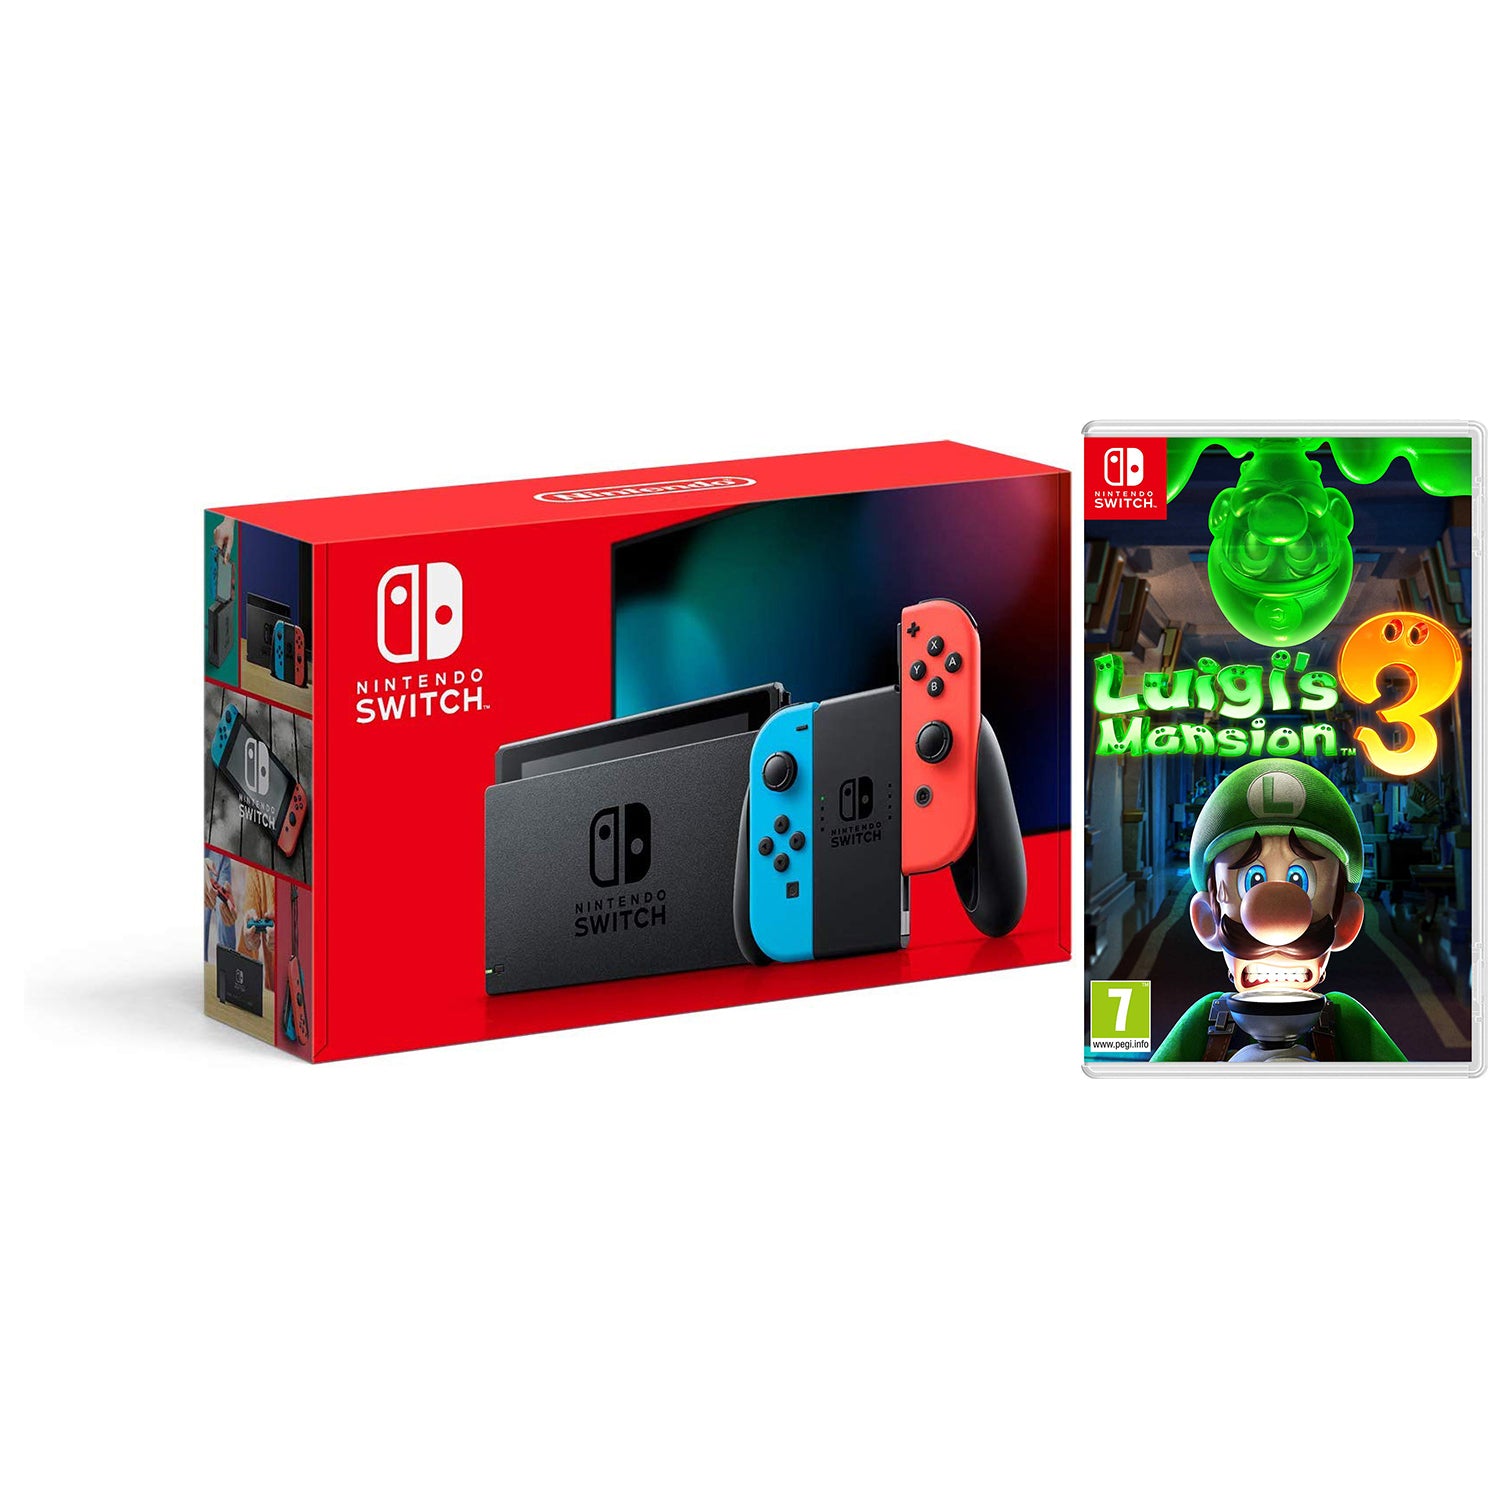 Nintendo Switch 32GB Console - Neon Joy-Con - New Version with Luigis Mansion 3 - Pro-Distributing